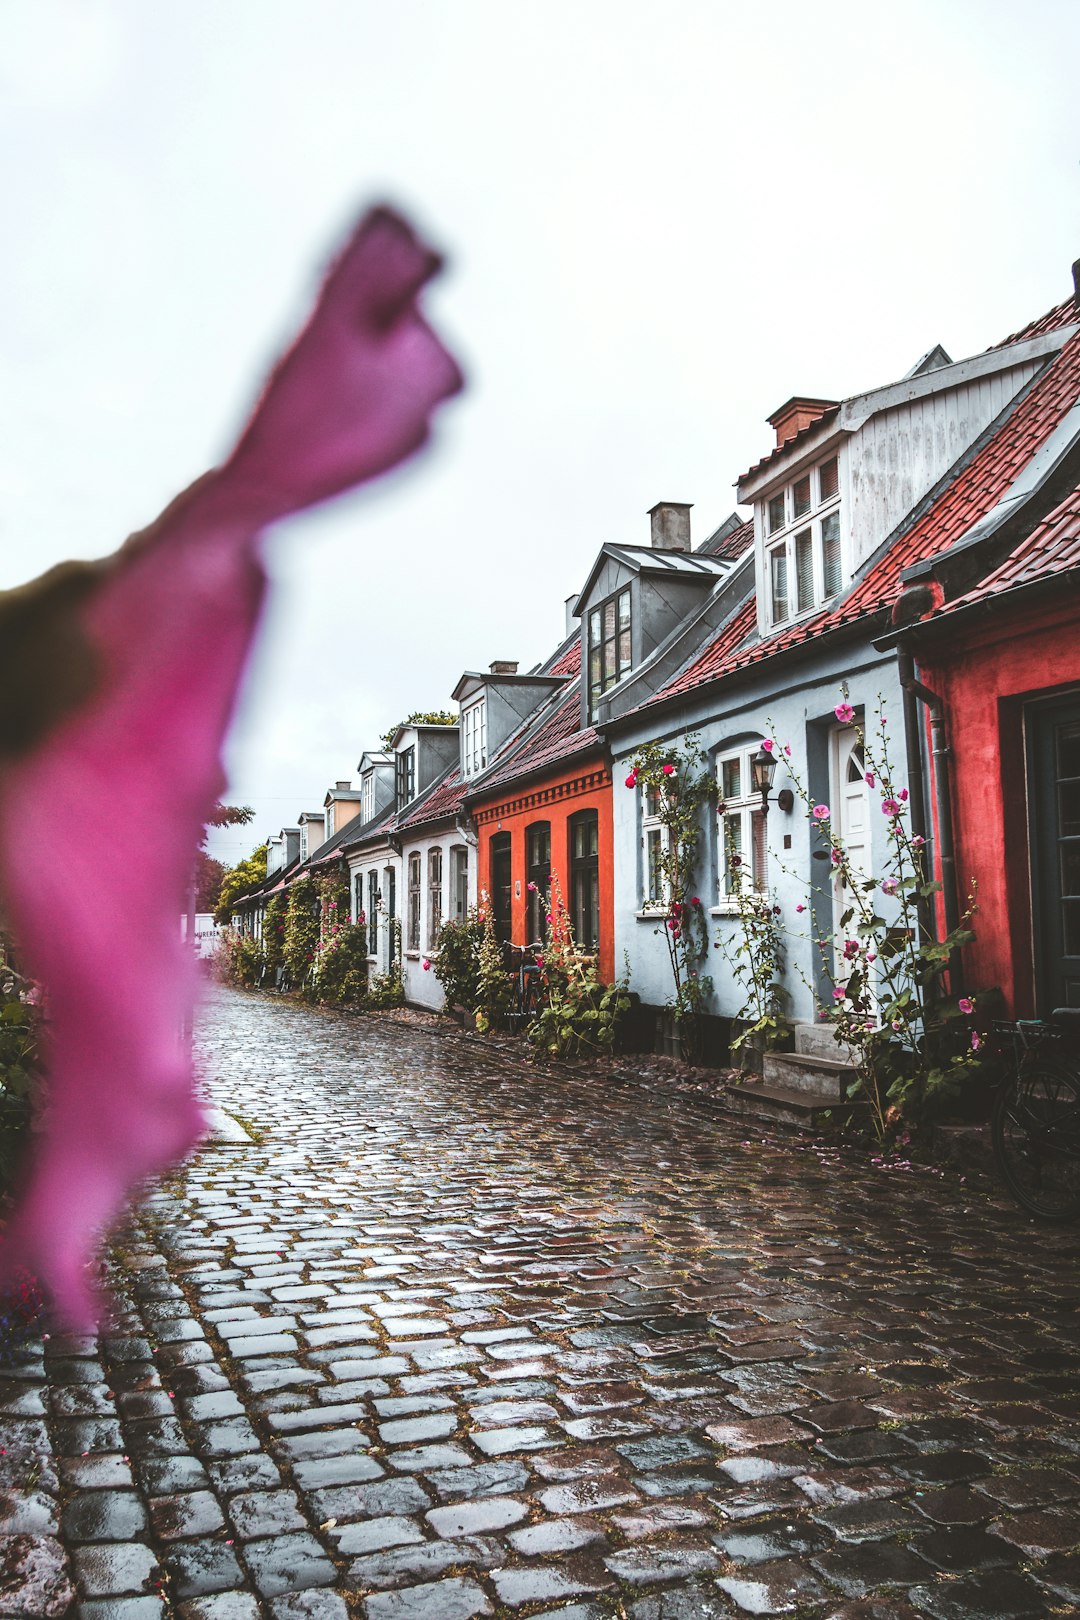 travelers stories about Town in Møllestien, Denmark